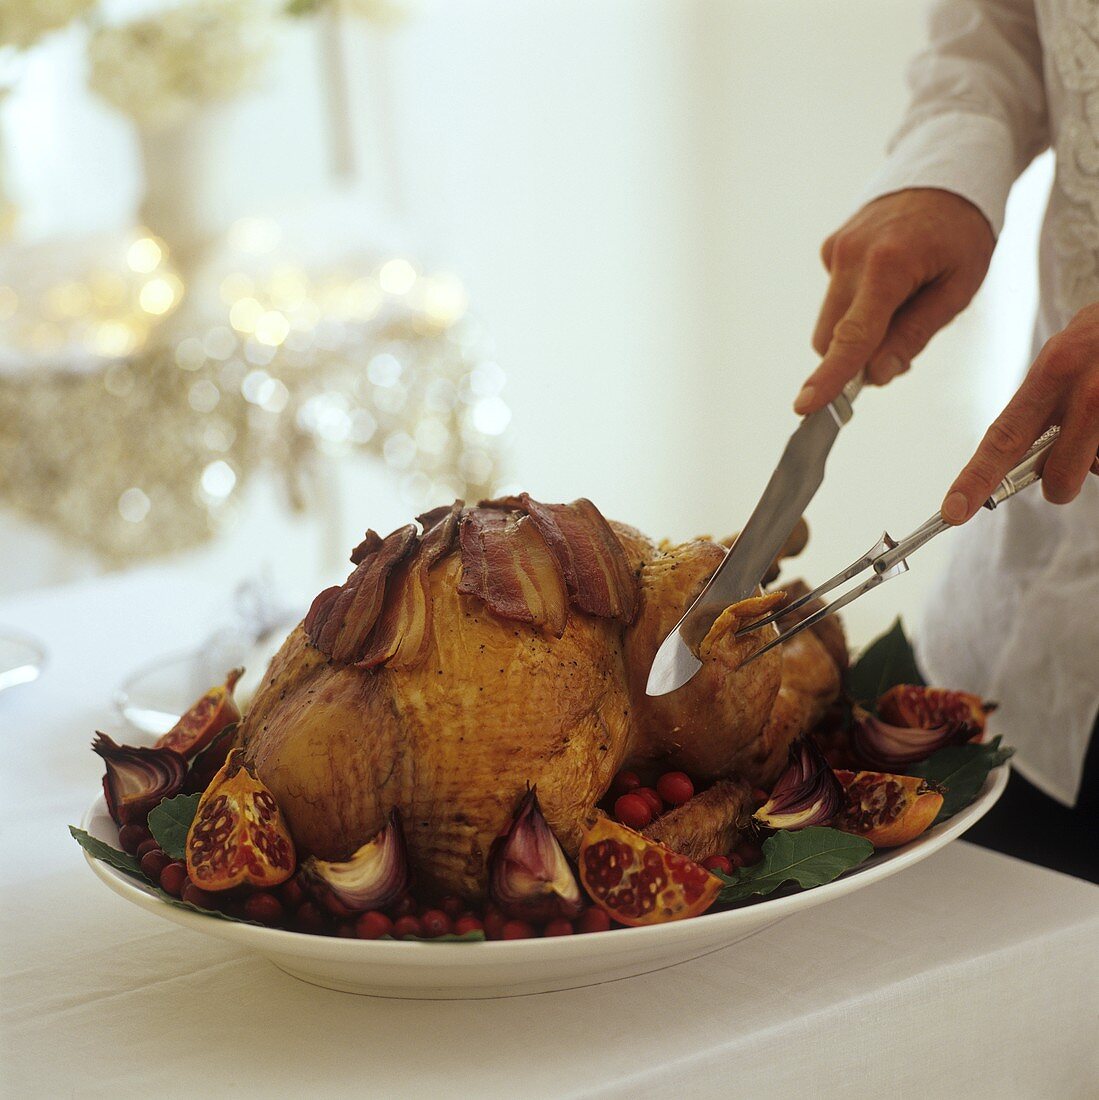 Roast turkey being carved